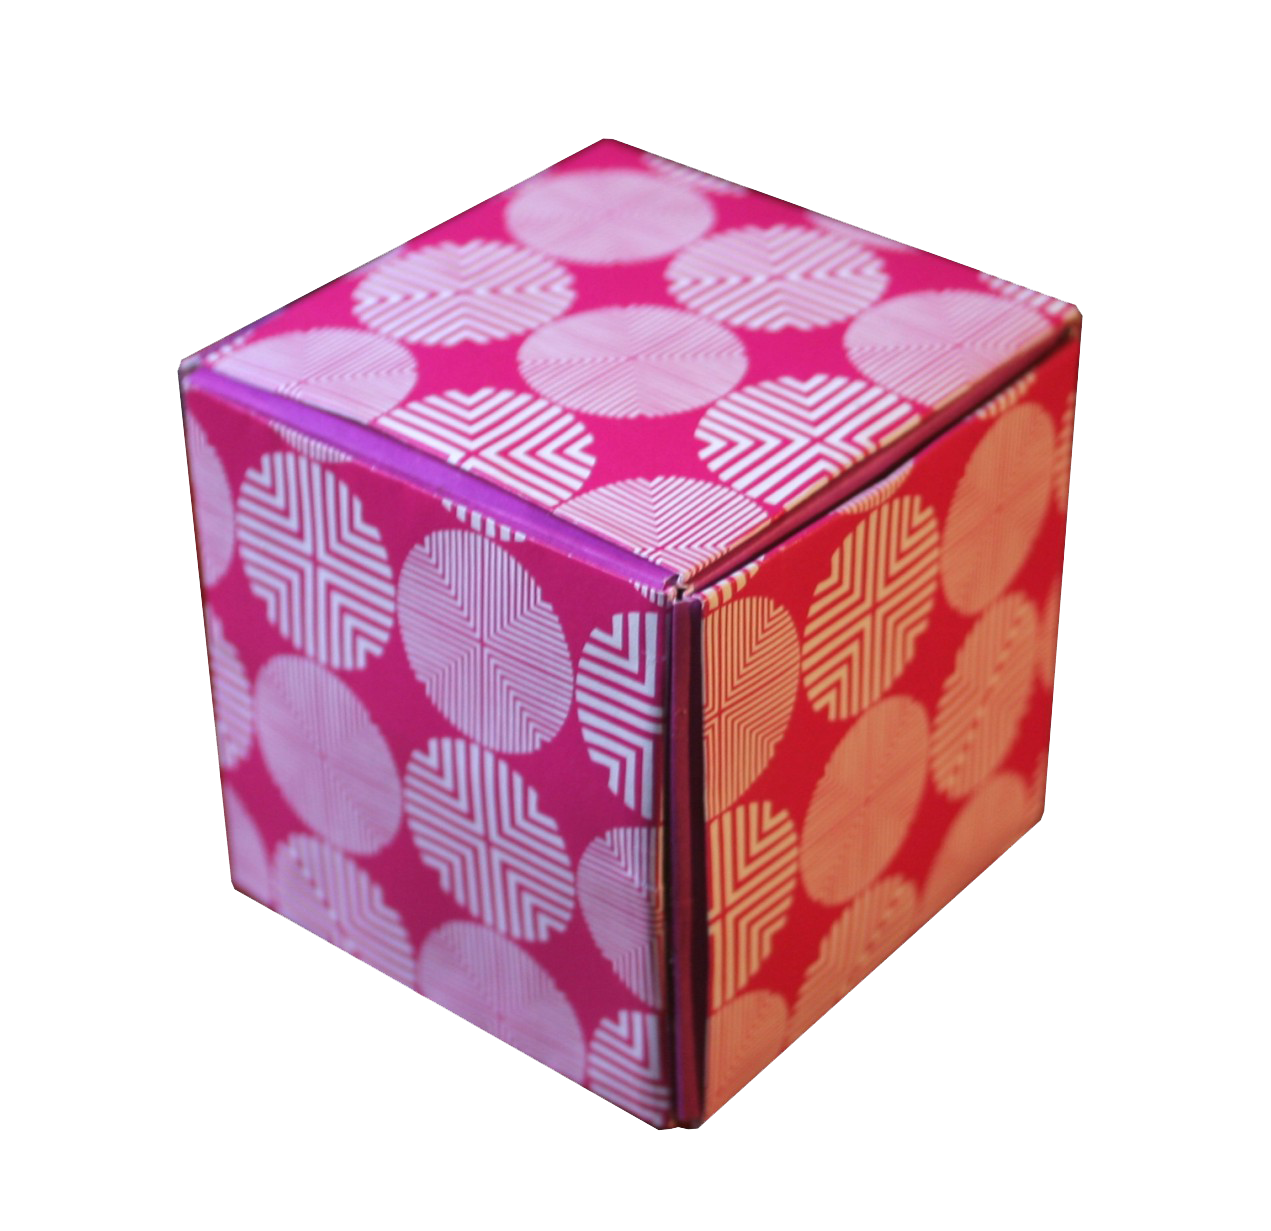 cube - Tomoko Fuse' - Multidimensional Transformations - Unit Origami